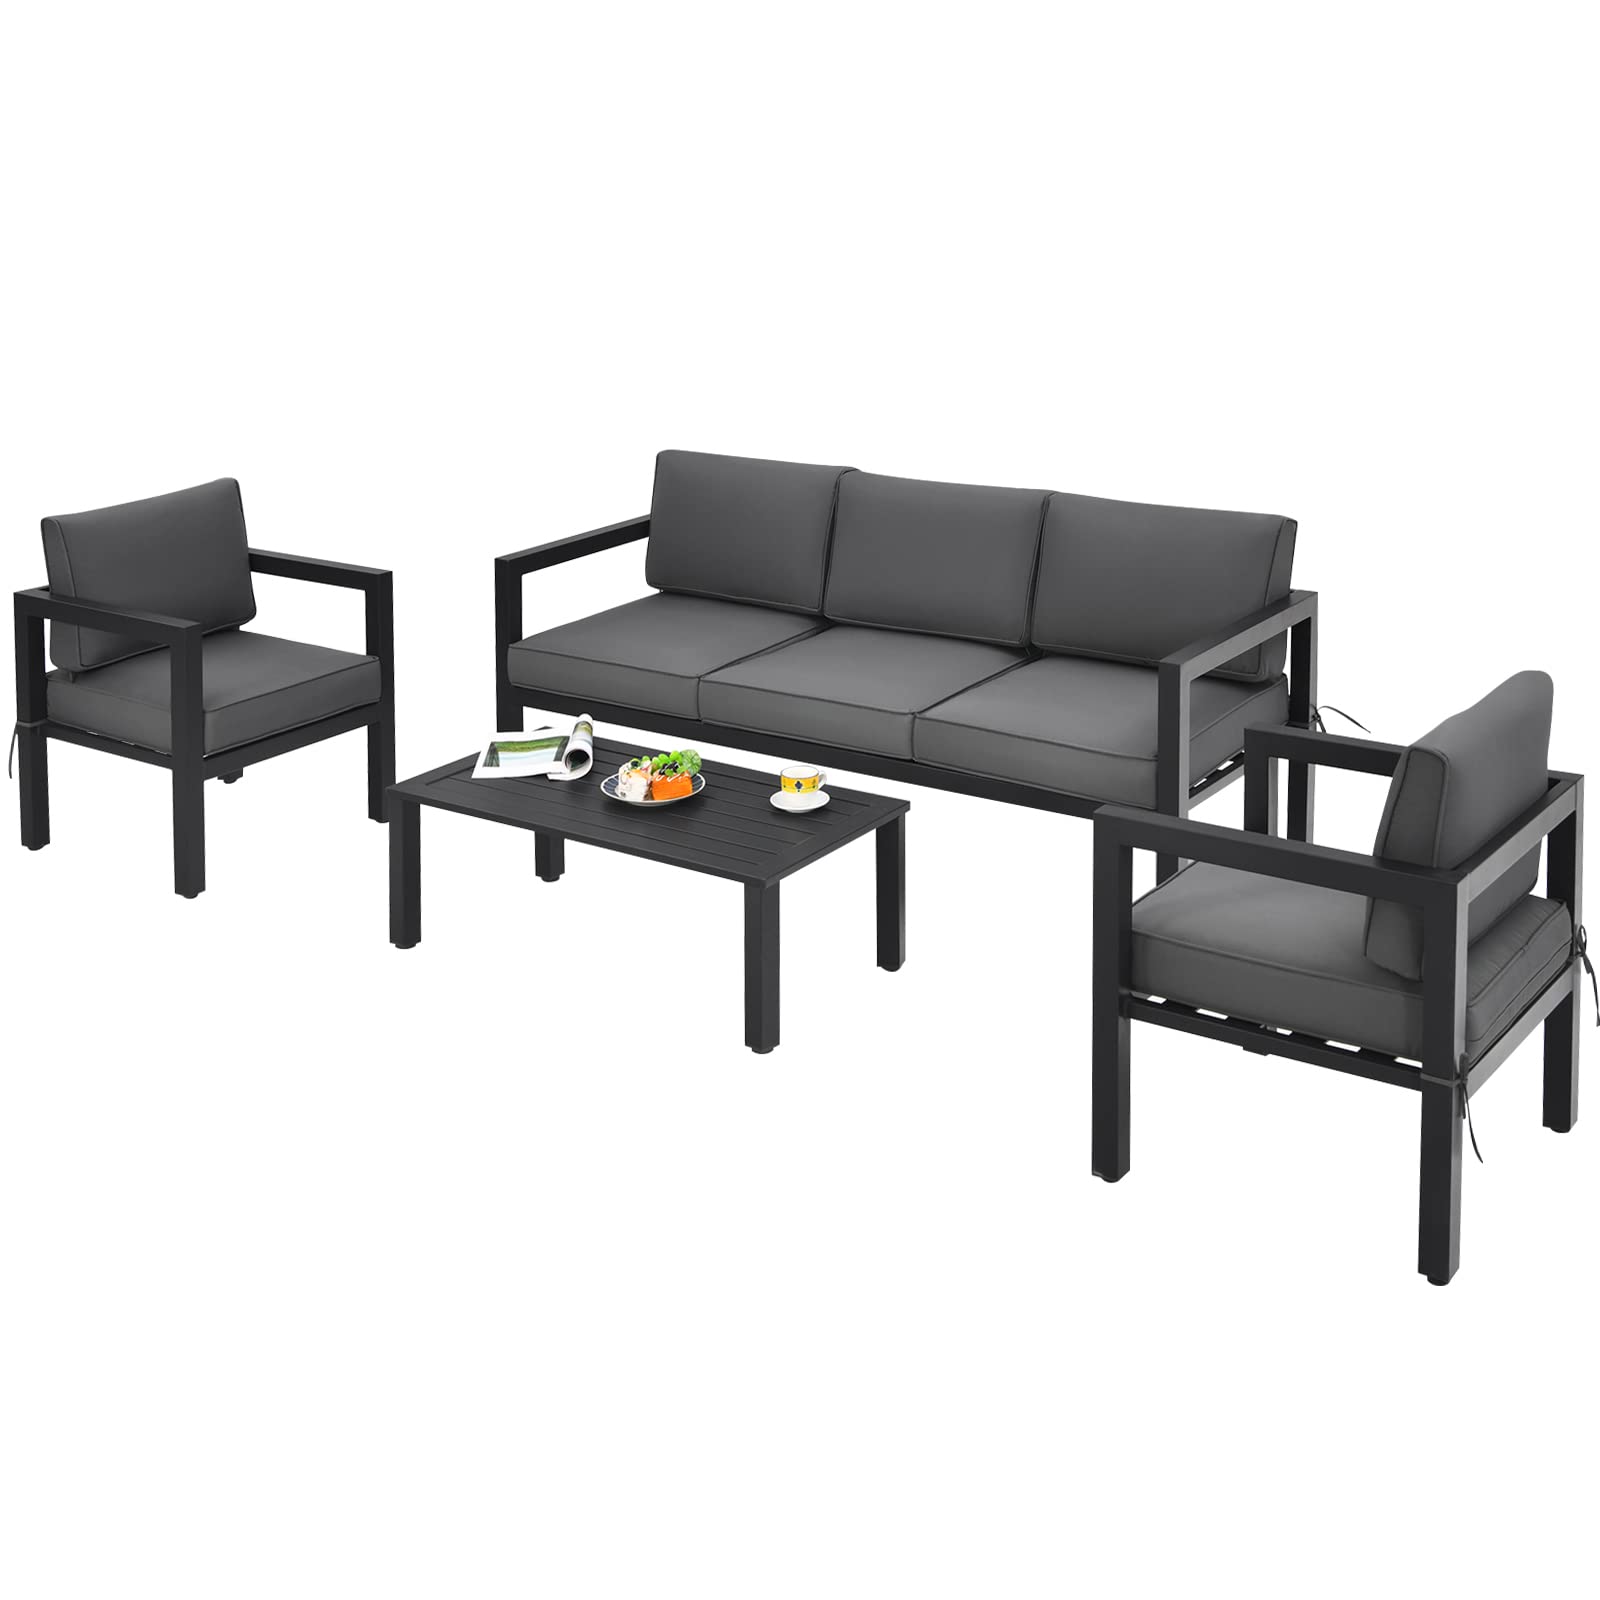 Giantex 4 Pieces Patio Furniture Set, Outdoor Aluminum Conversation Set